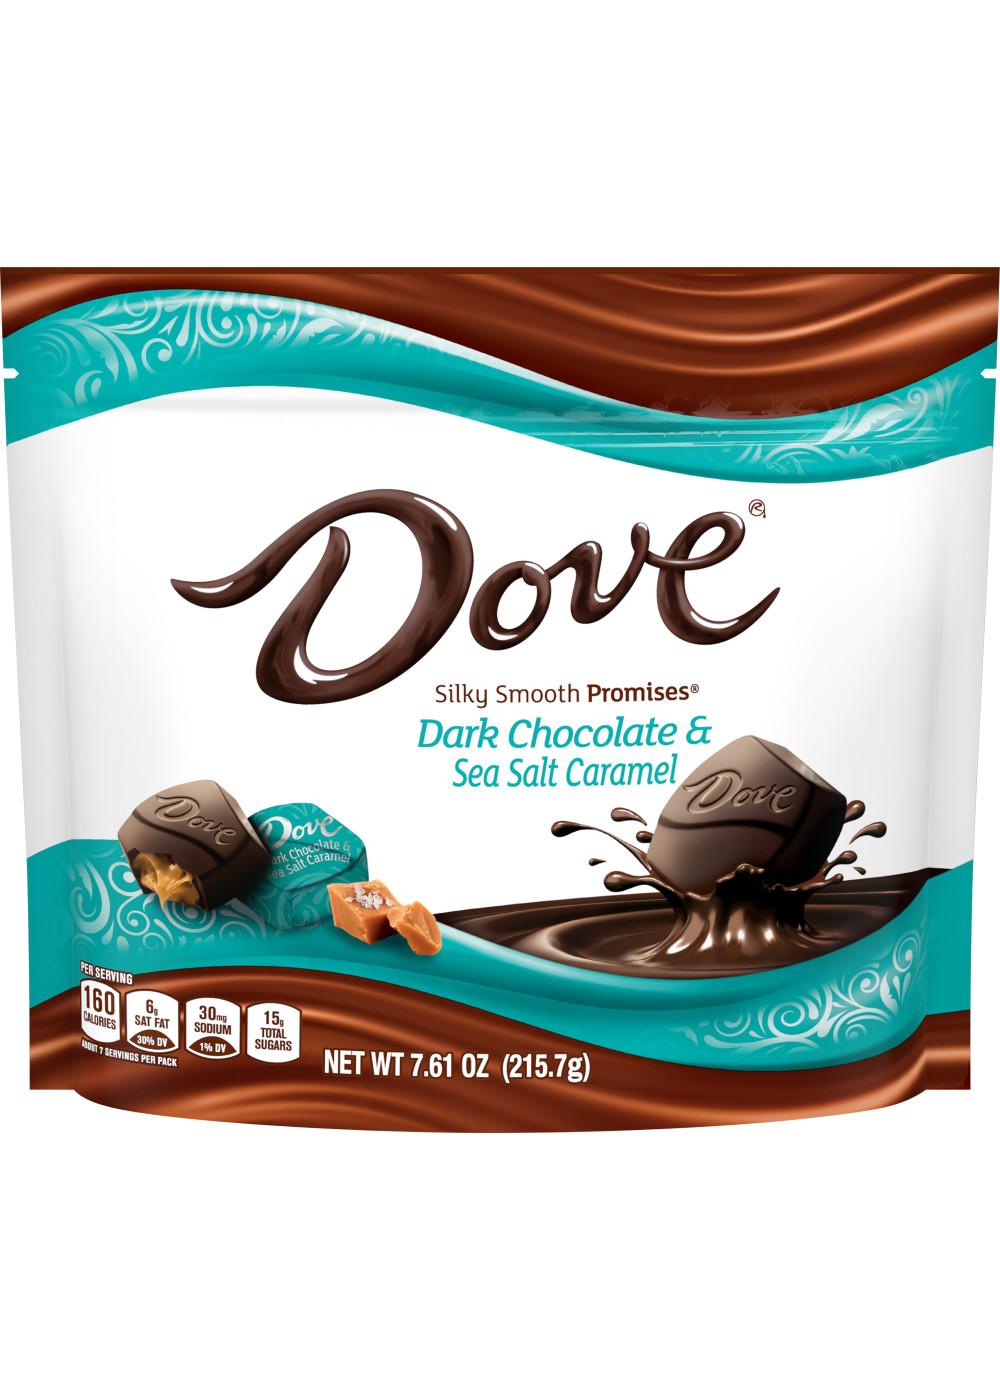 Dove Promises Dark Chocolate & Sea Salt Caramel Candy; image 1 of 8